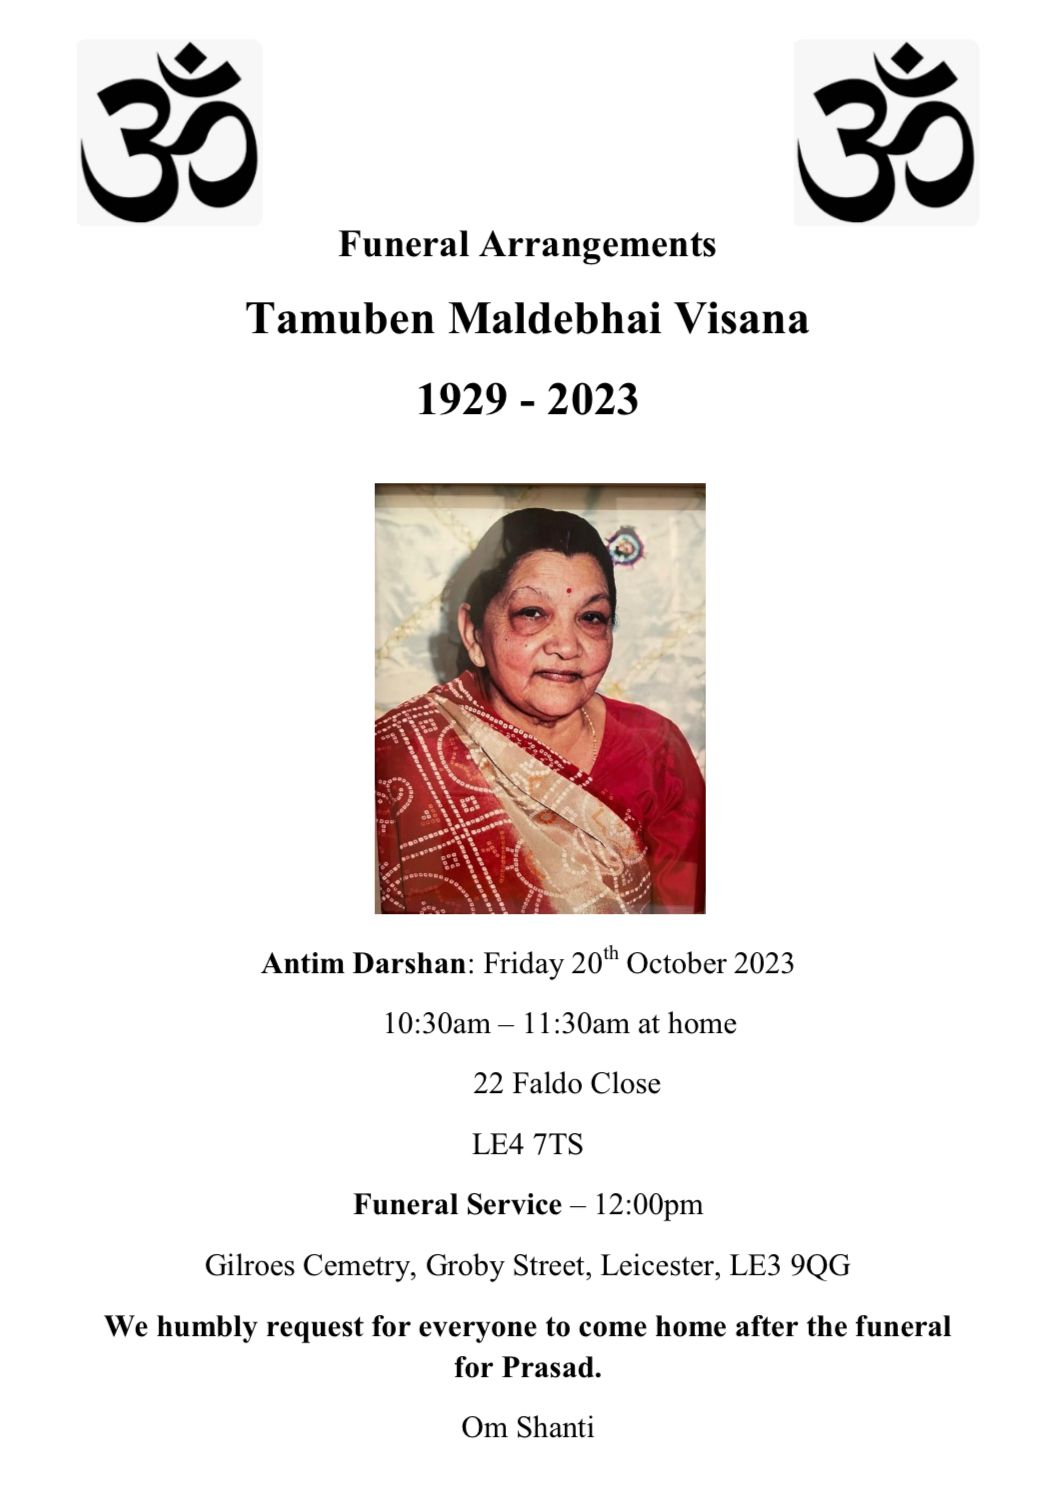 Tamuben Maldebhai Visana passed away